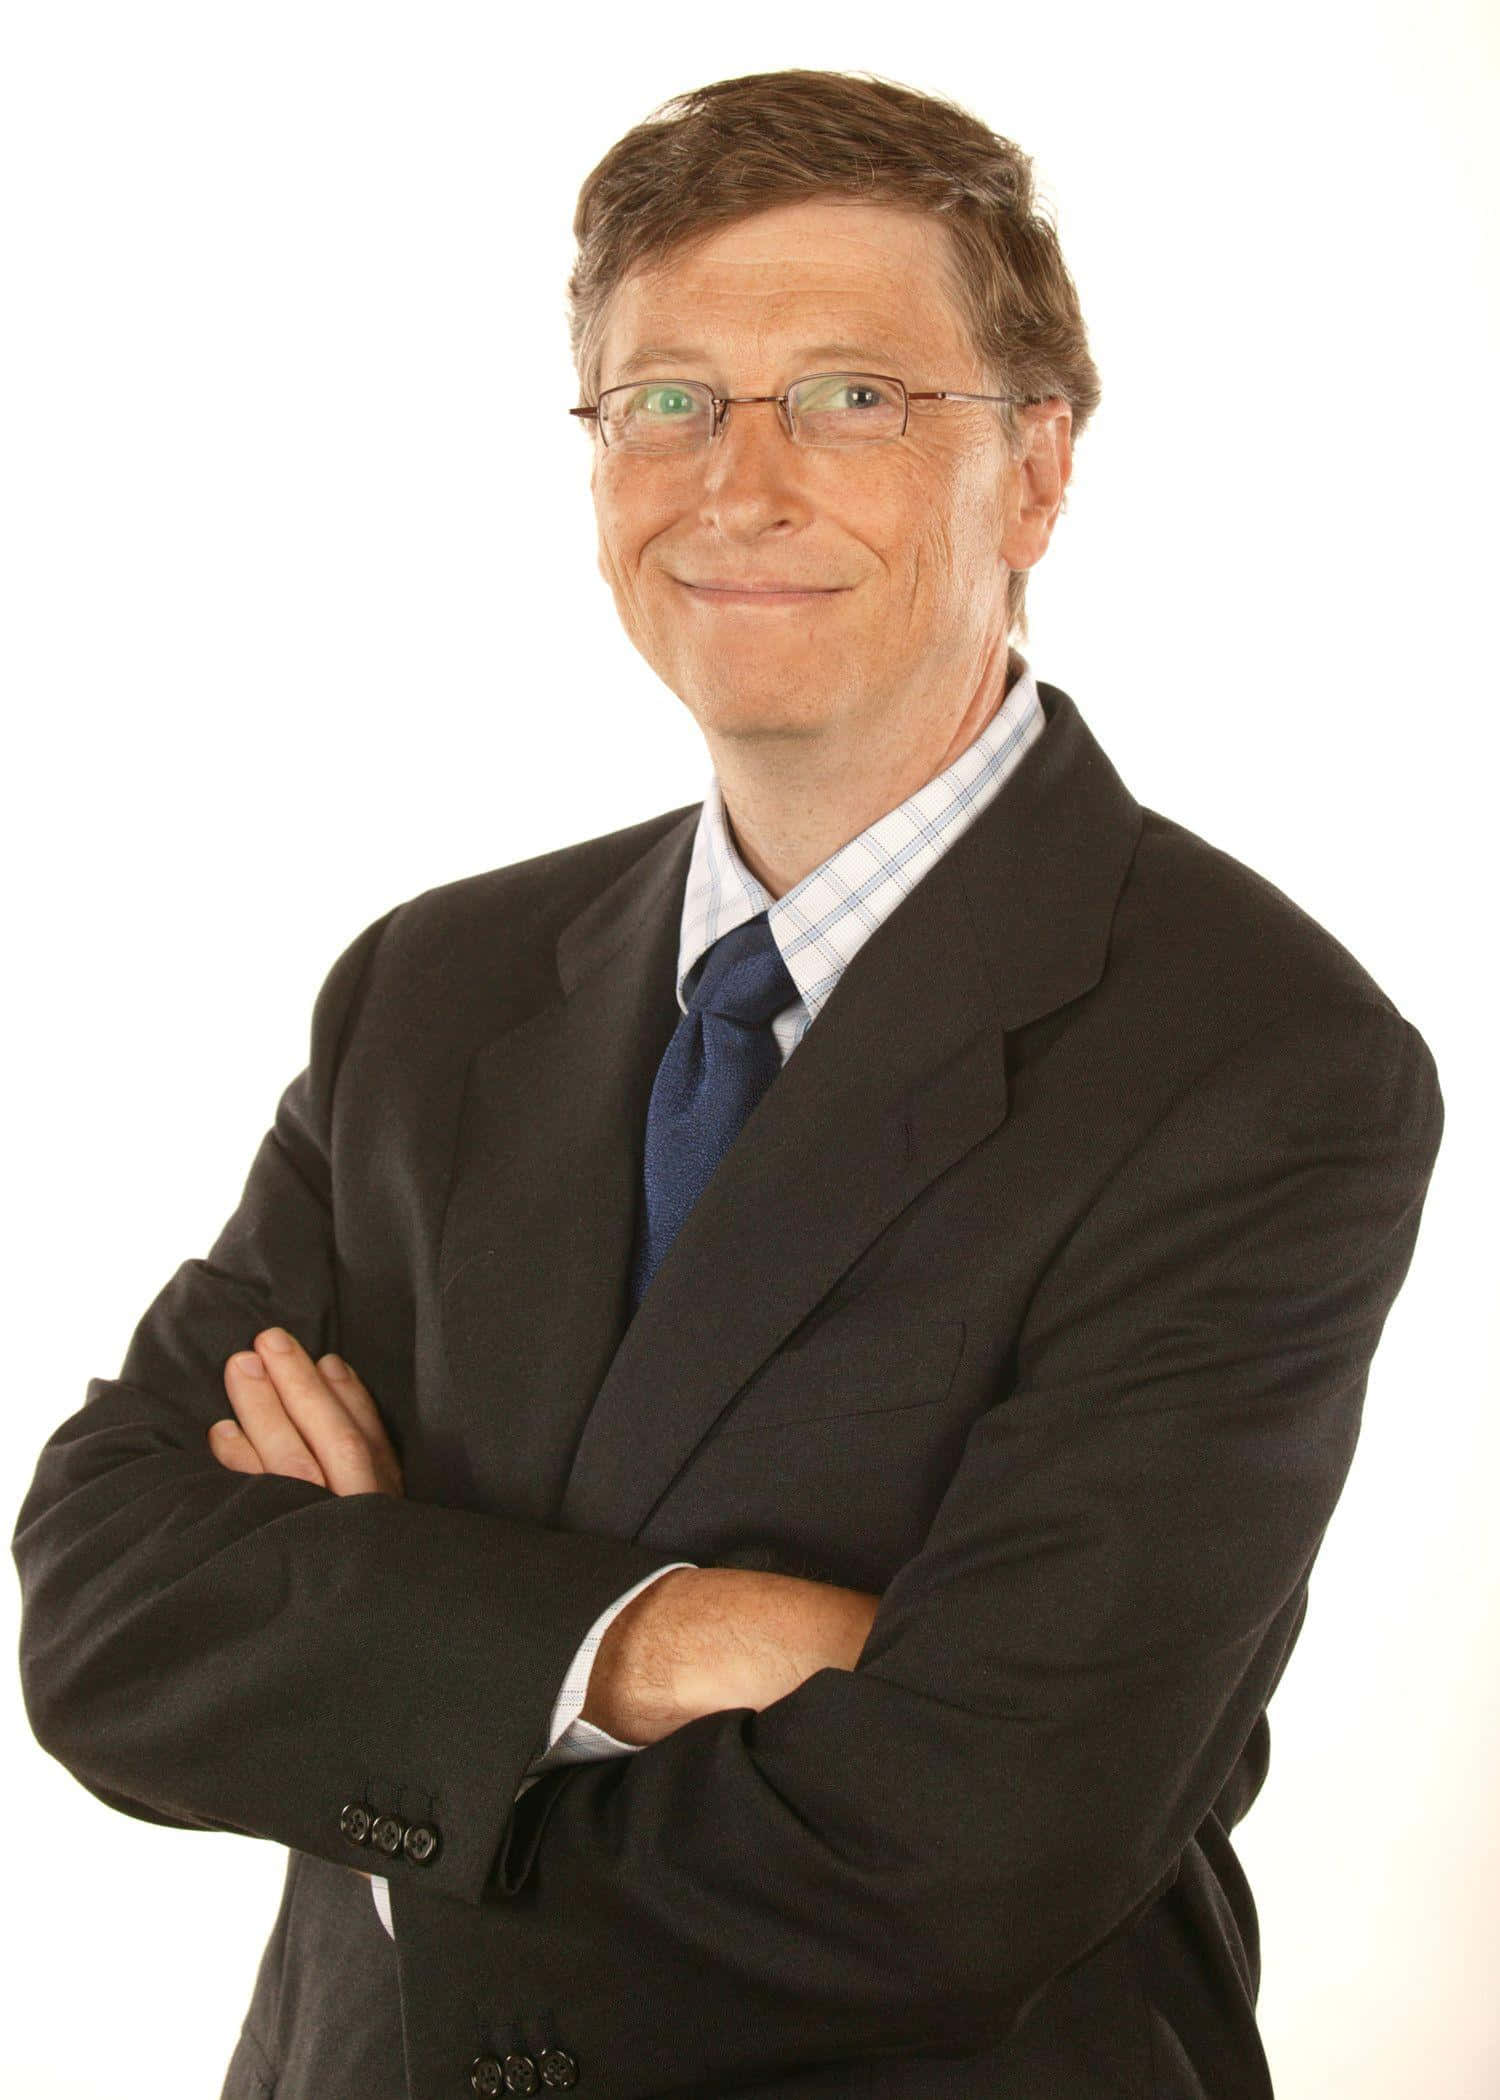 Bill Gates, Tech Innovator